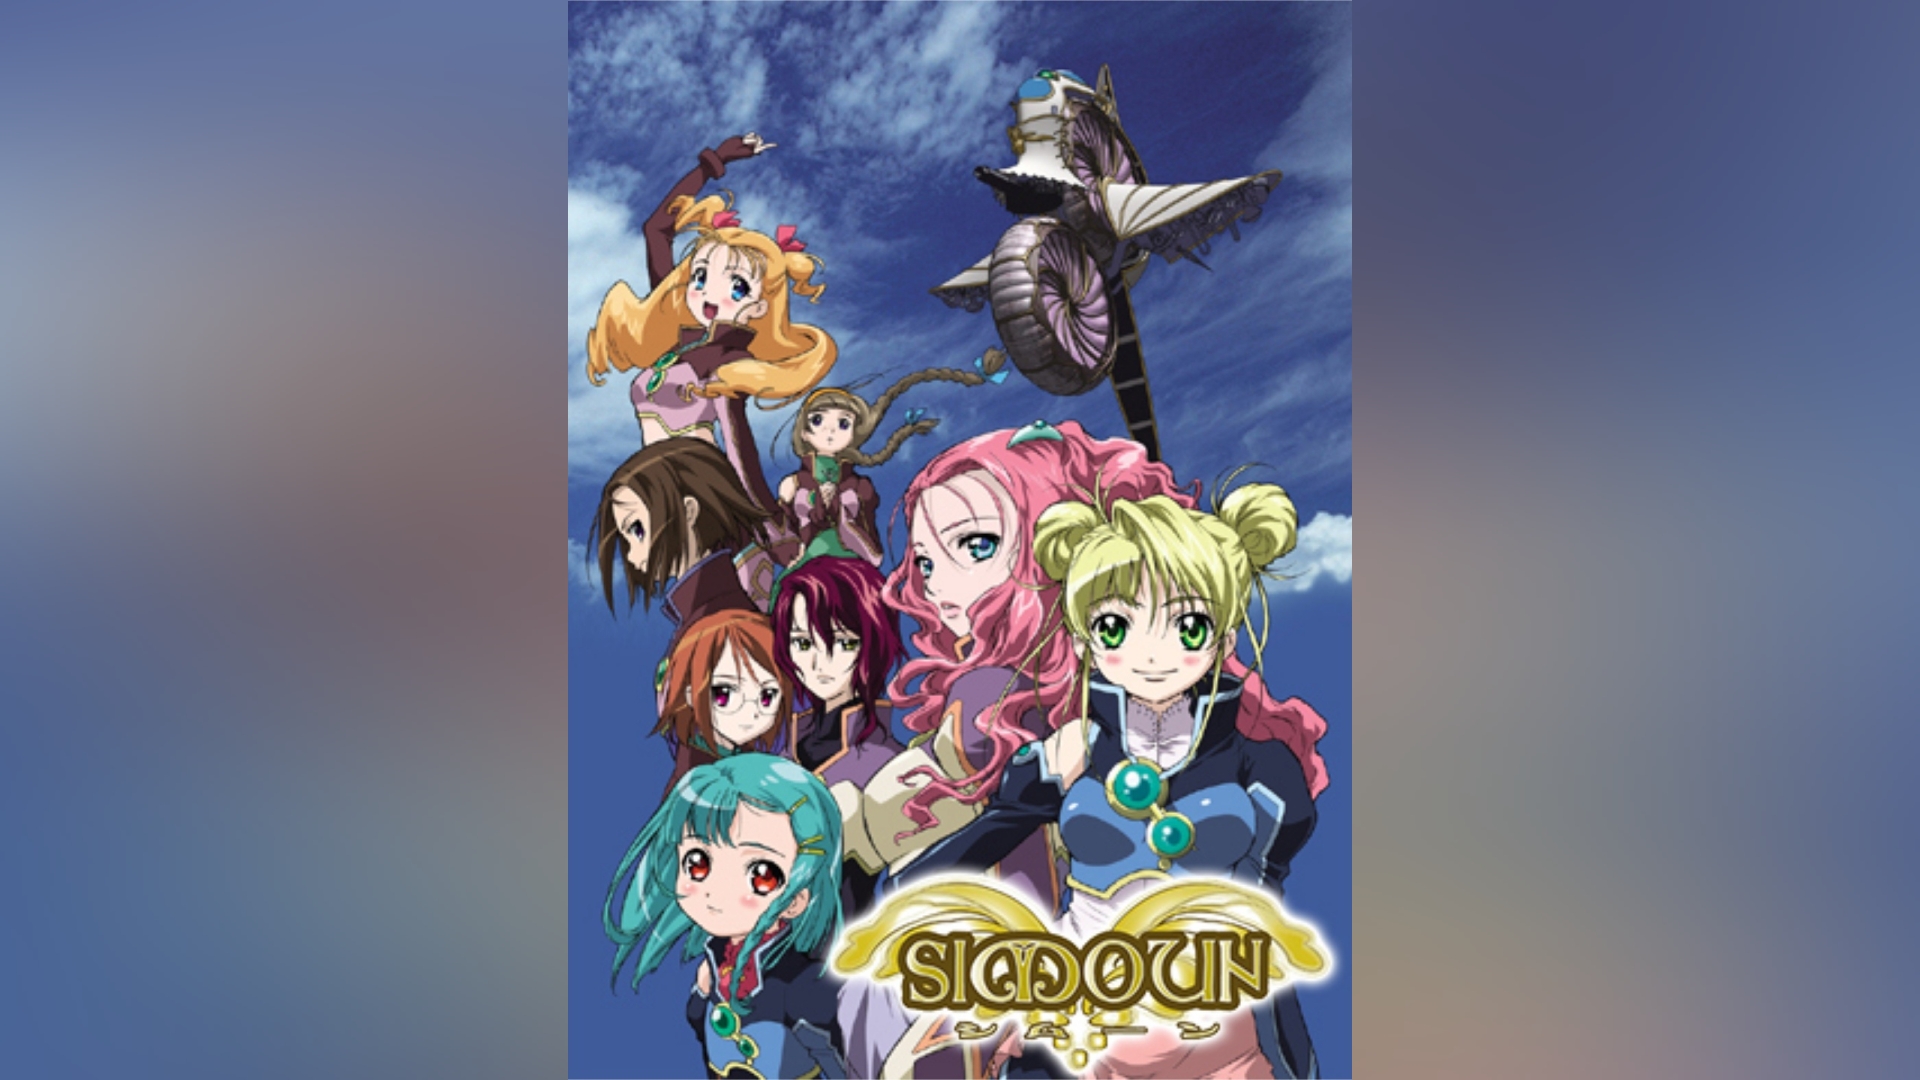 Buy simoun - 182947 | Premium Anime Poster | Animeprintz.com